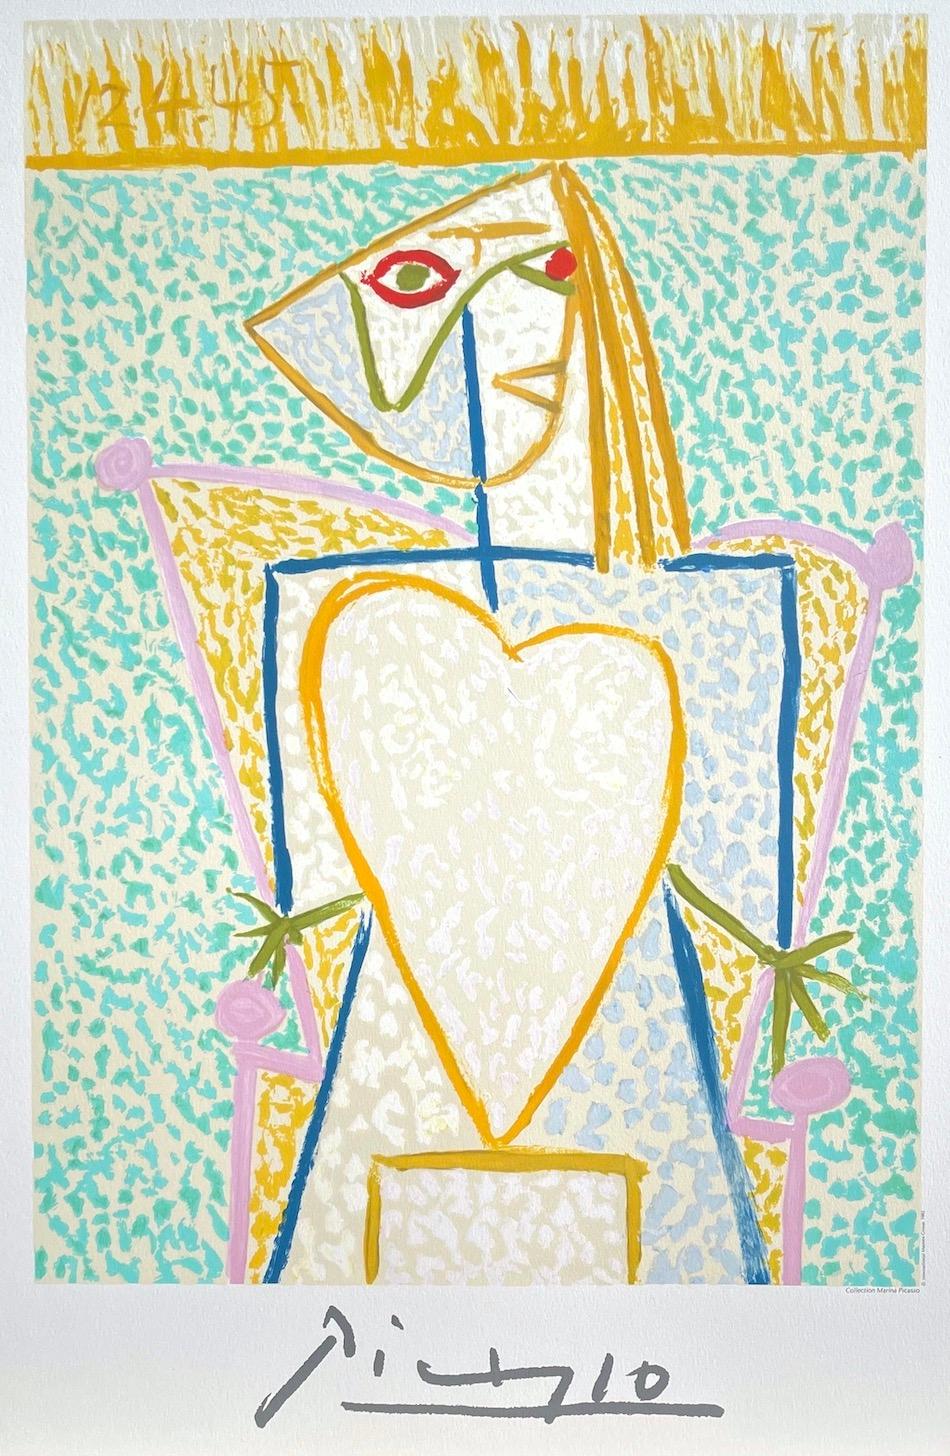 FEMME AU BUSTE EN COEUR Lithograph, Colorful Stick Figure Woman w Yellow Heart  - Print by (after) Pablo Picasso